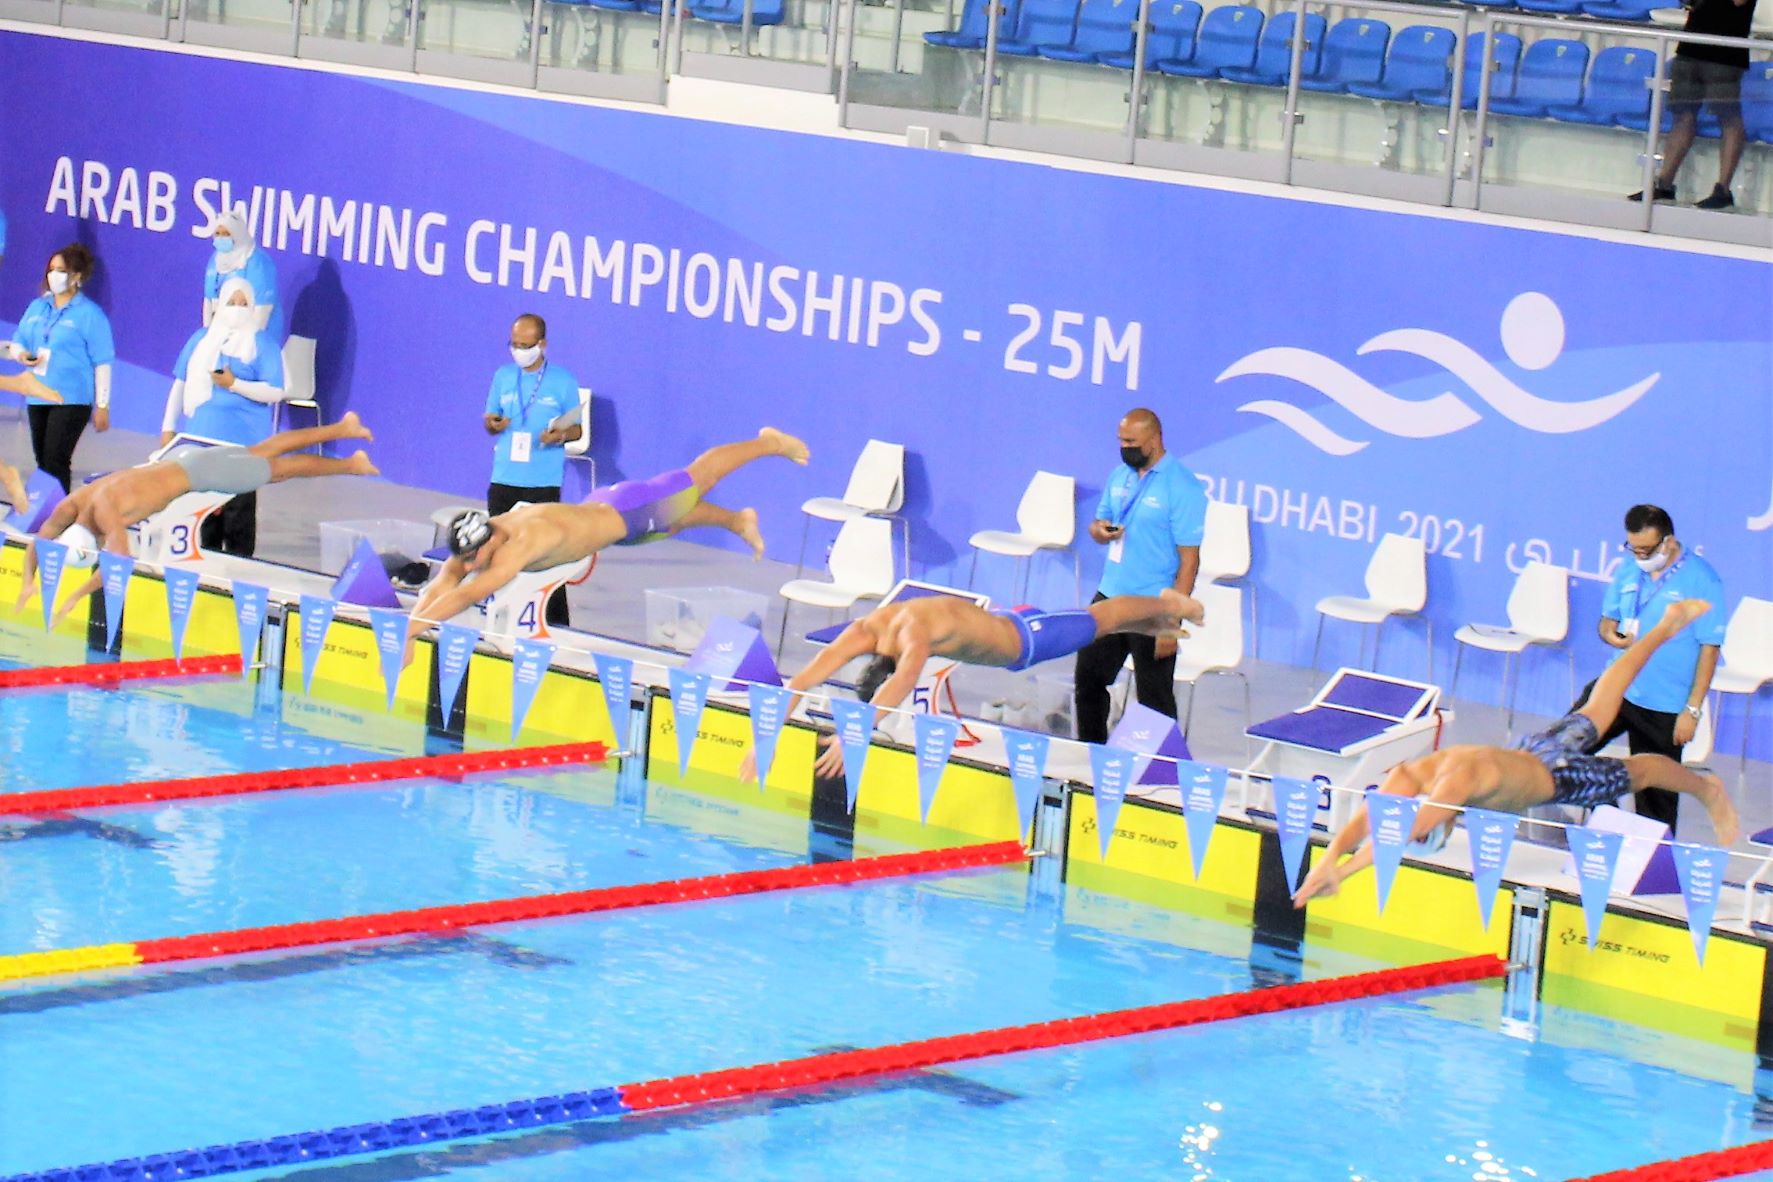 Qatar Swimming Team Win 9 Medals at Arab Championship in Abu Dhabi